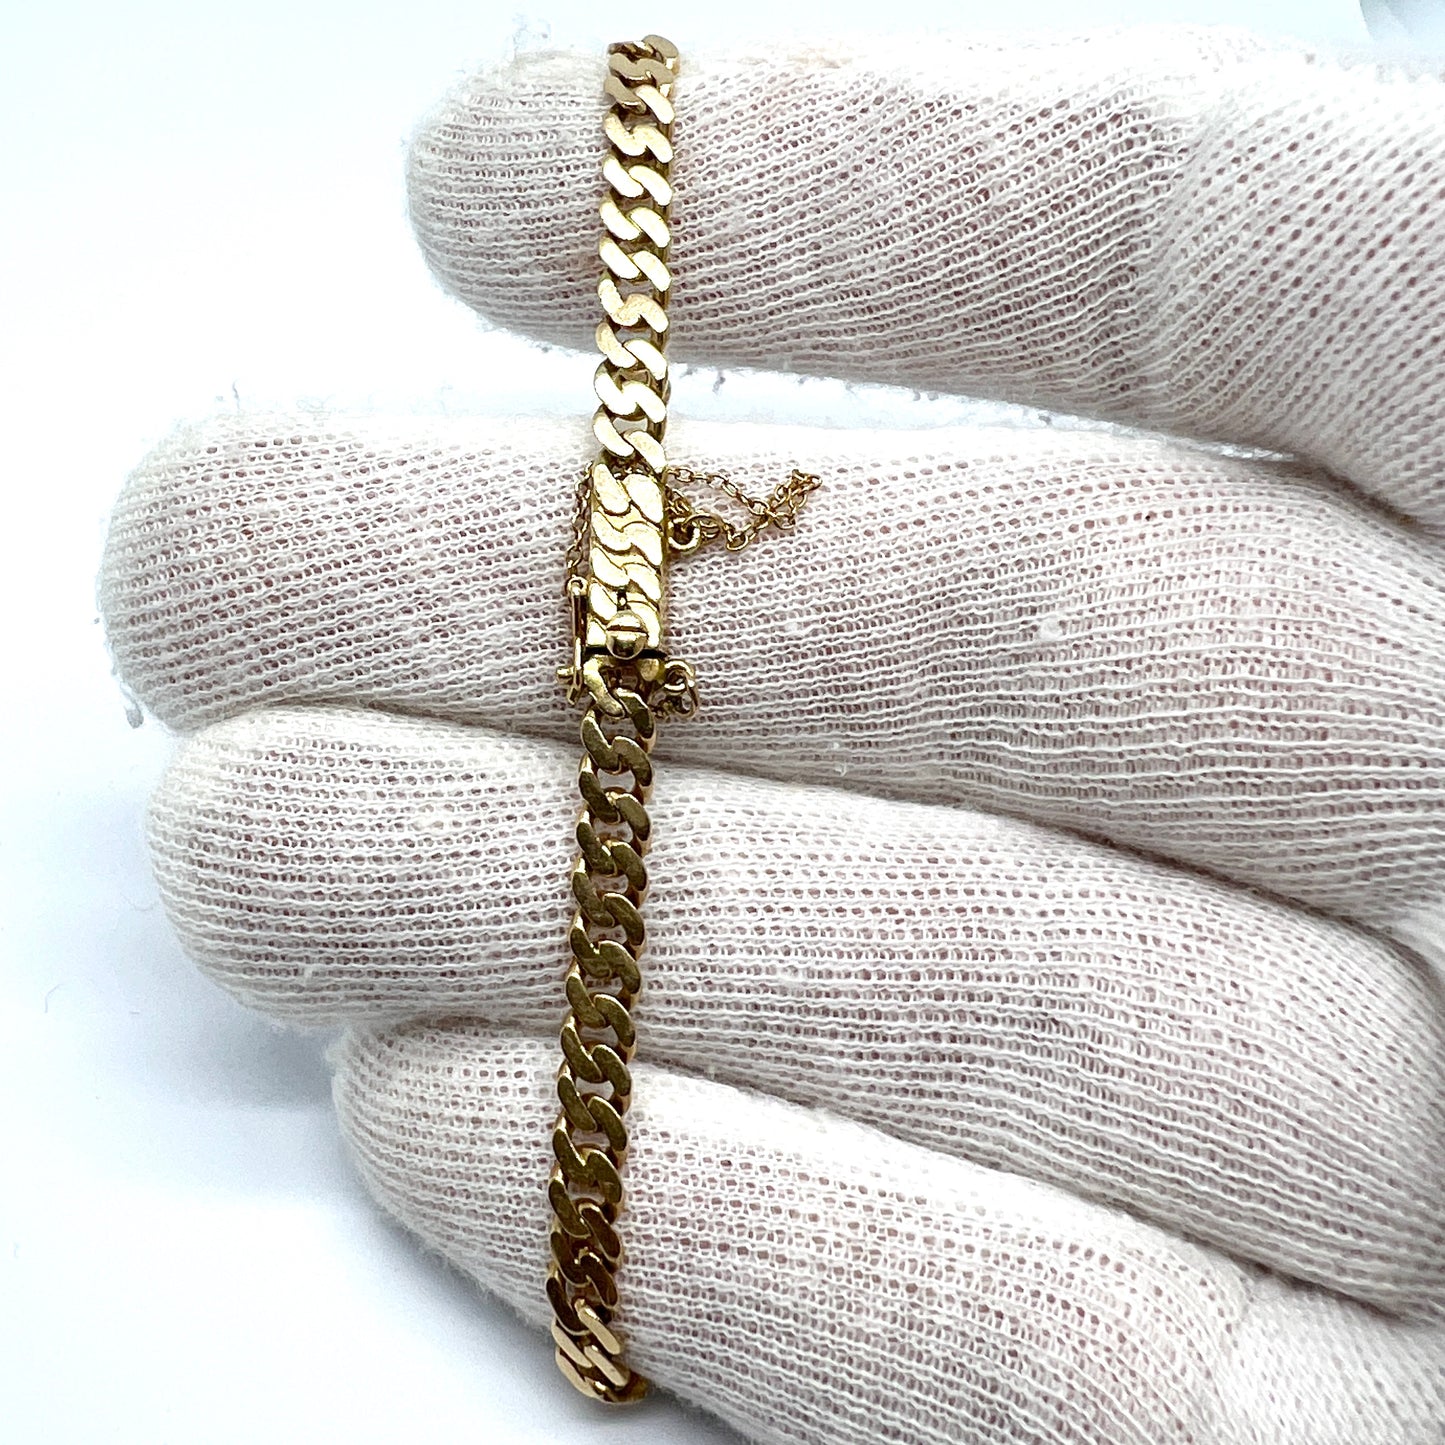 G Dahlgren, Sweden 1935. Vintage 18k Gold Bracelet.